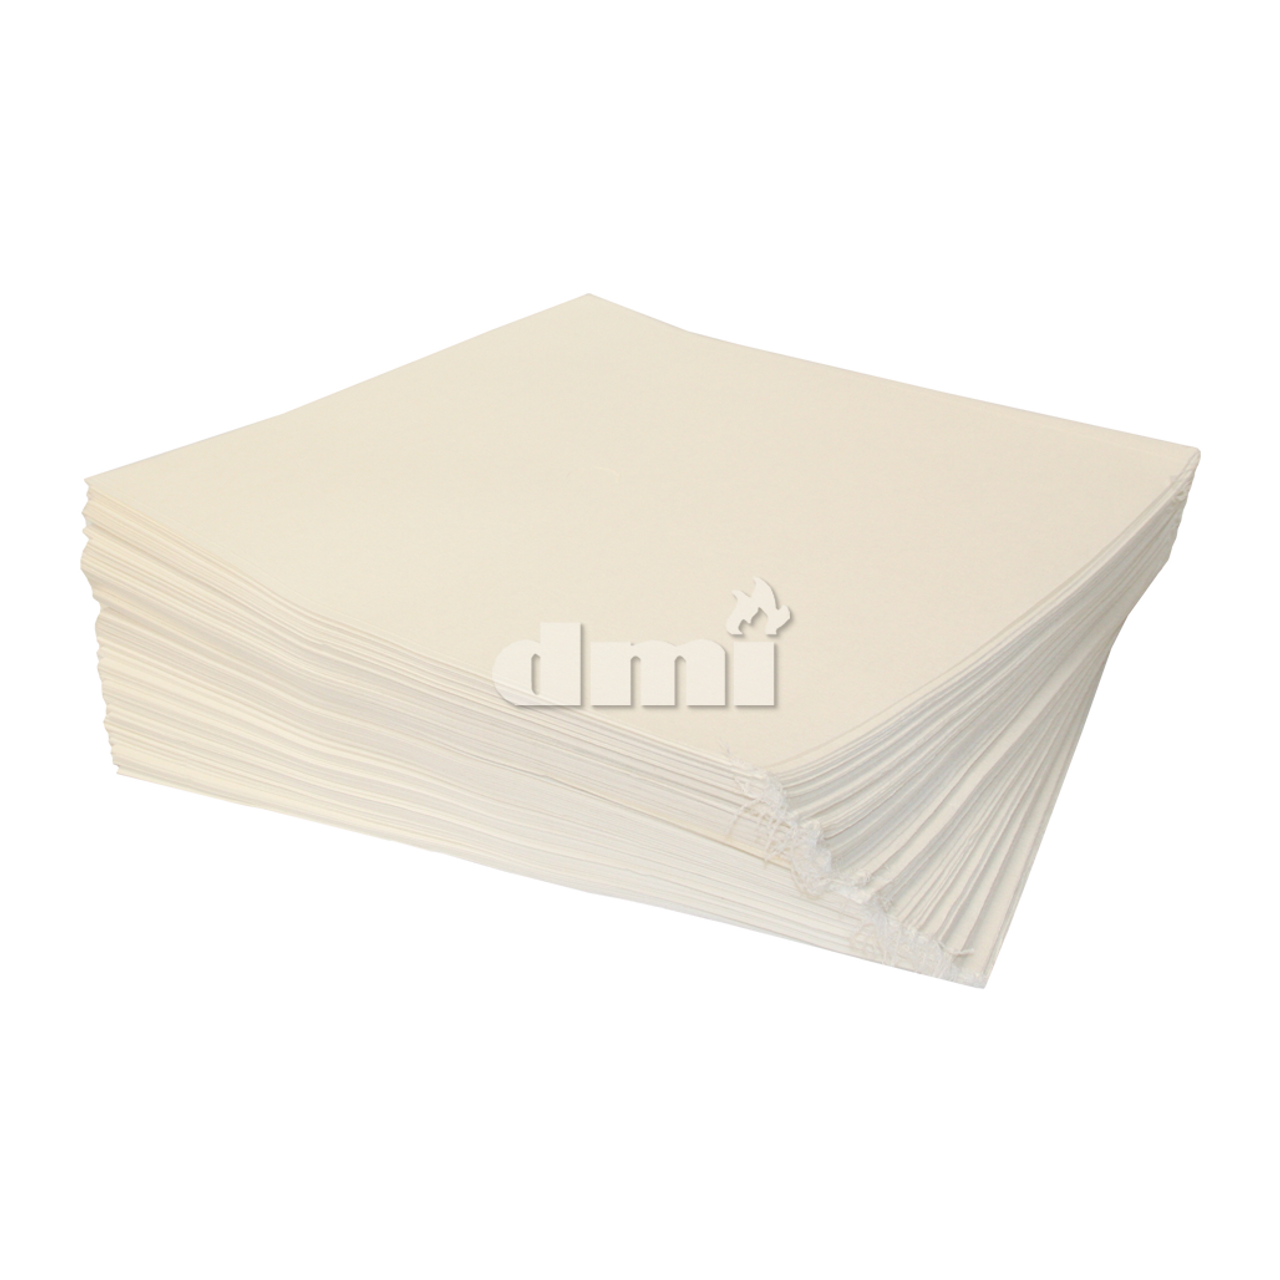 5550  Gycor Plain Paper Envelopes w/ Center Hole through one side, 19" x 20.5"